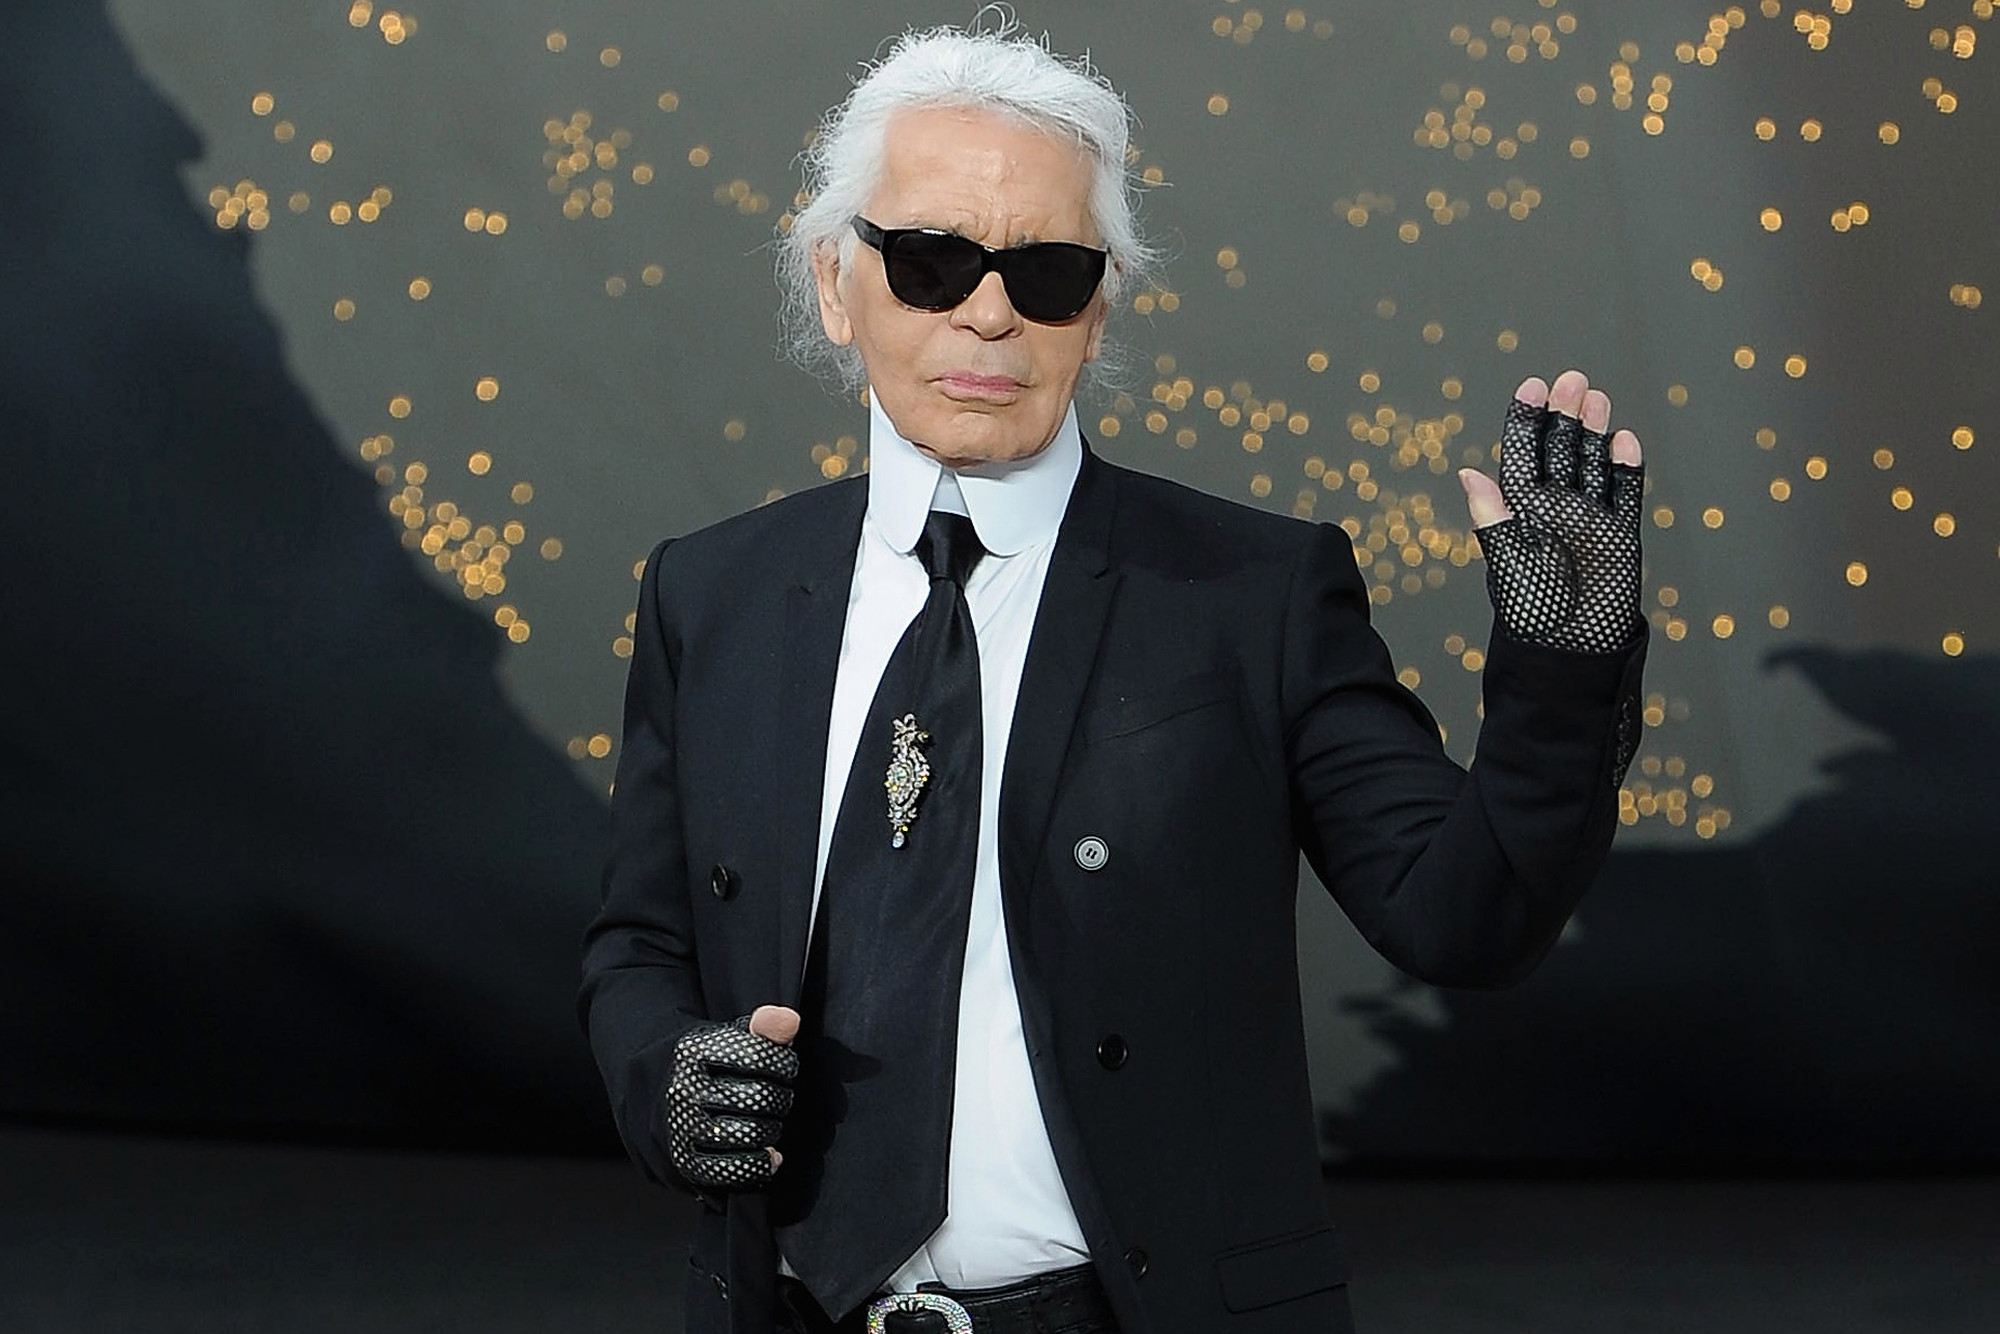 Iconic fashion designer Karl Lagerfeld dies at 85